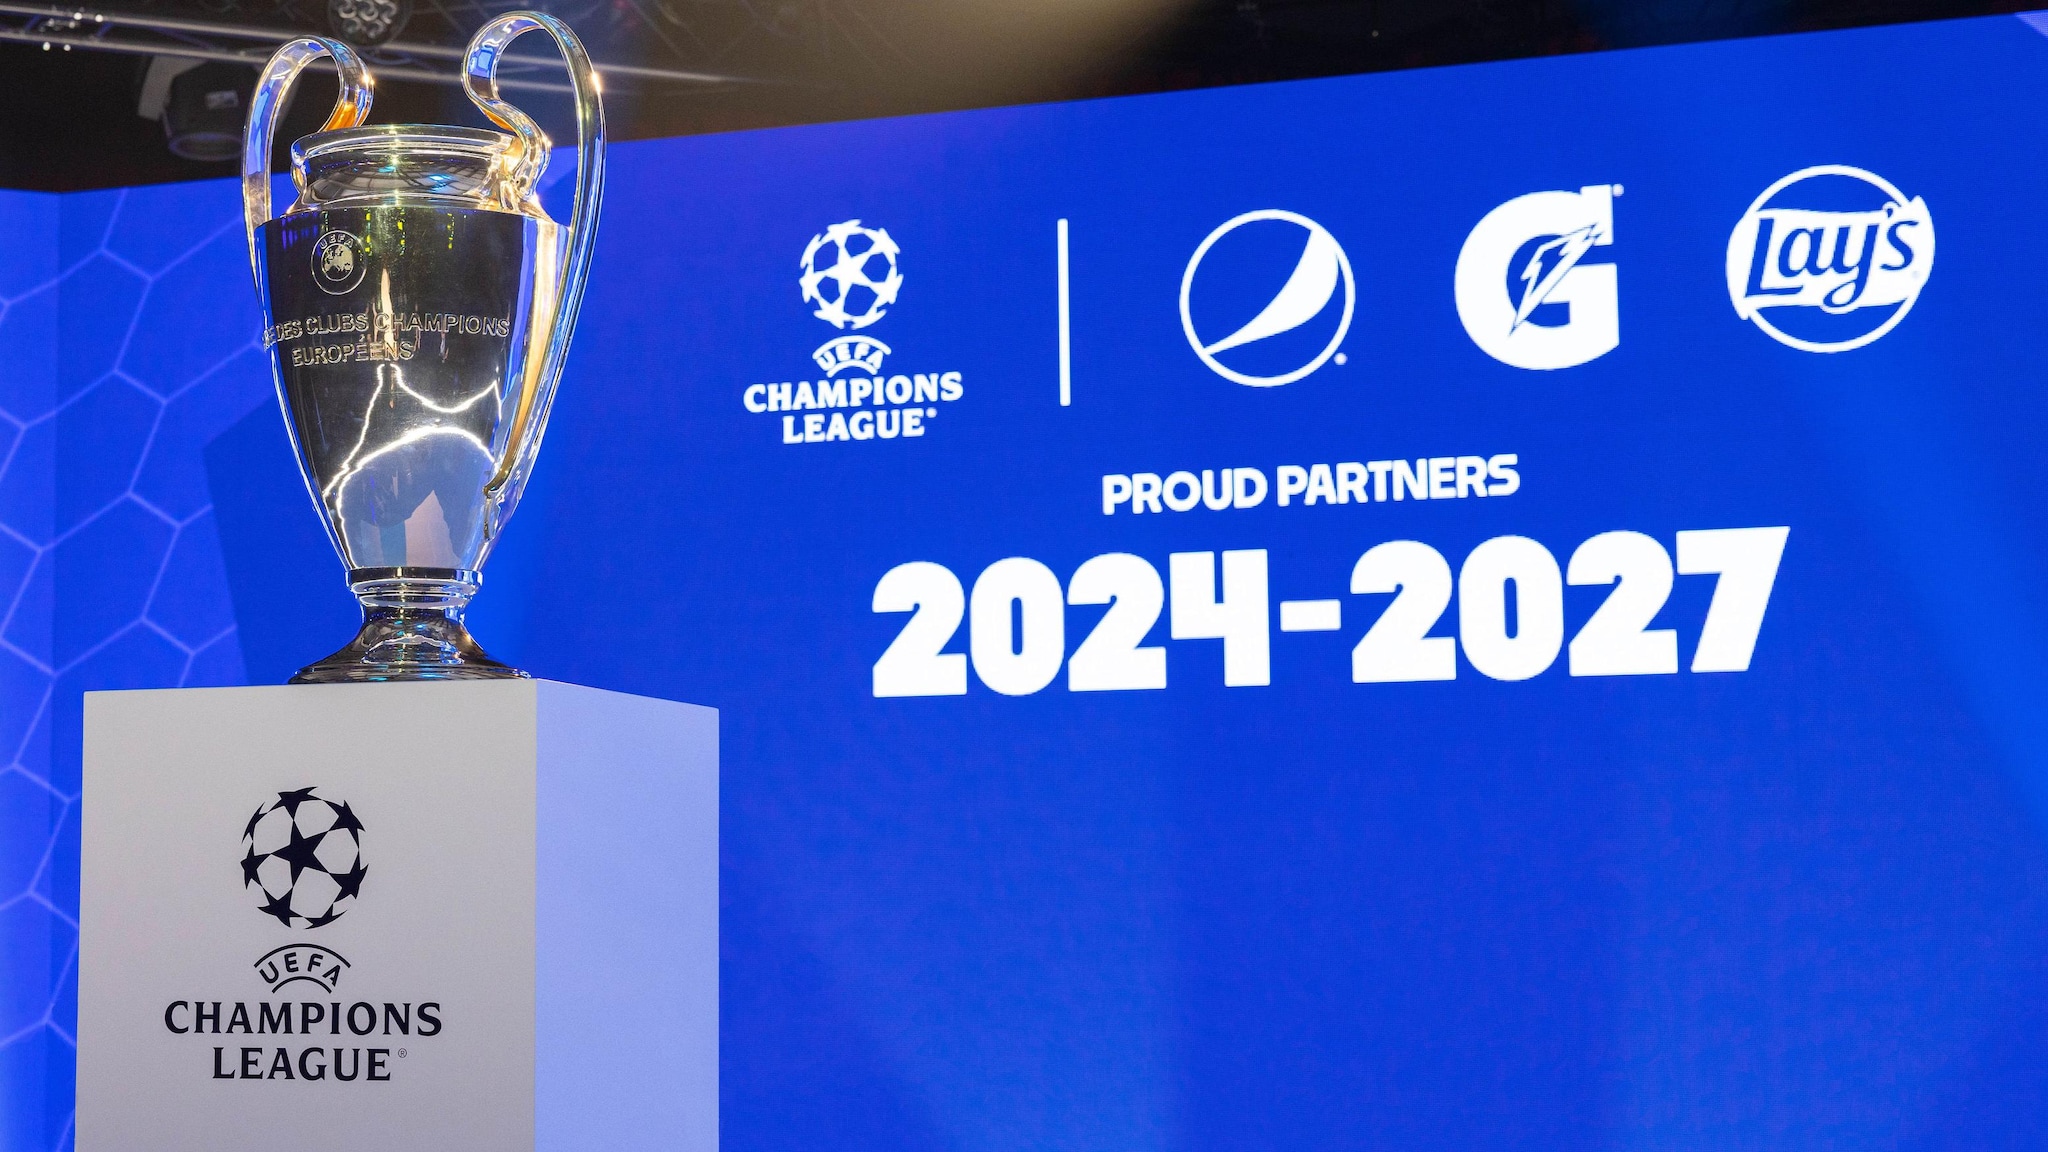 PepsiCo renews UEFA Champions League partnership for the 2024-2027